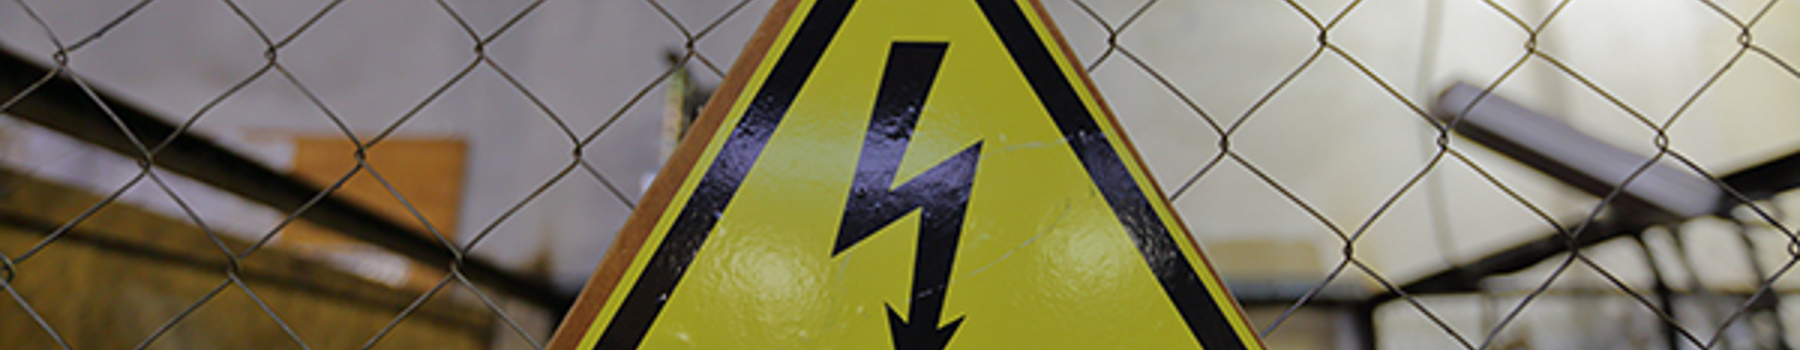 Safety Electric Shock Risk Enews